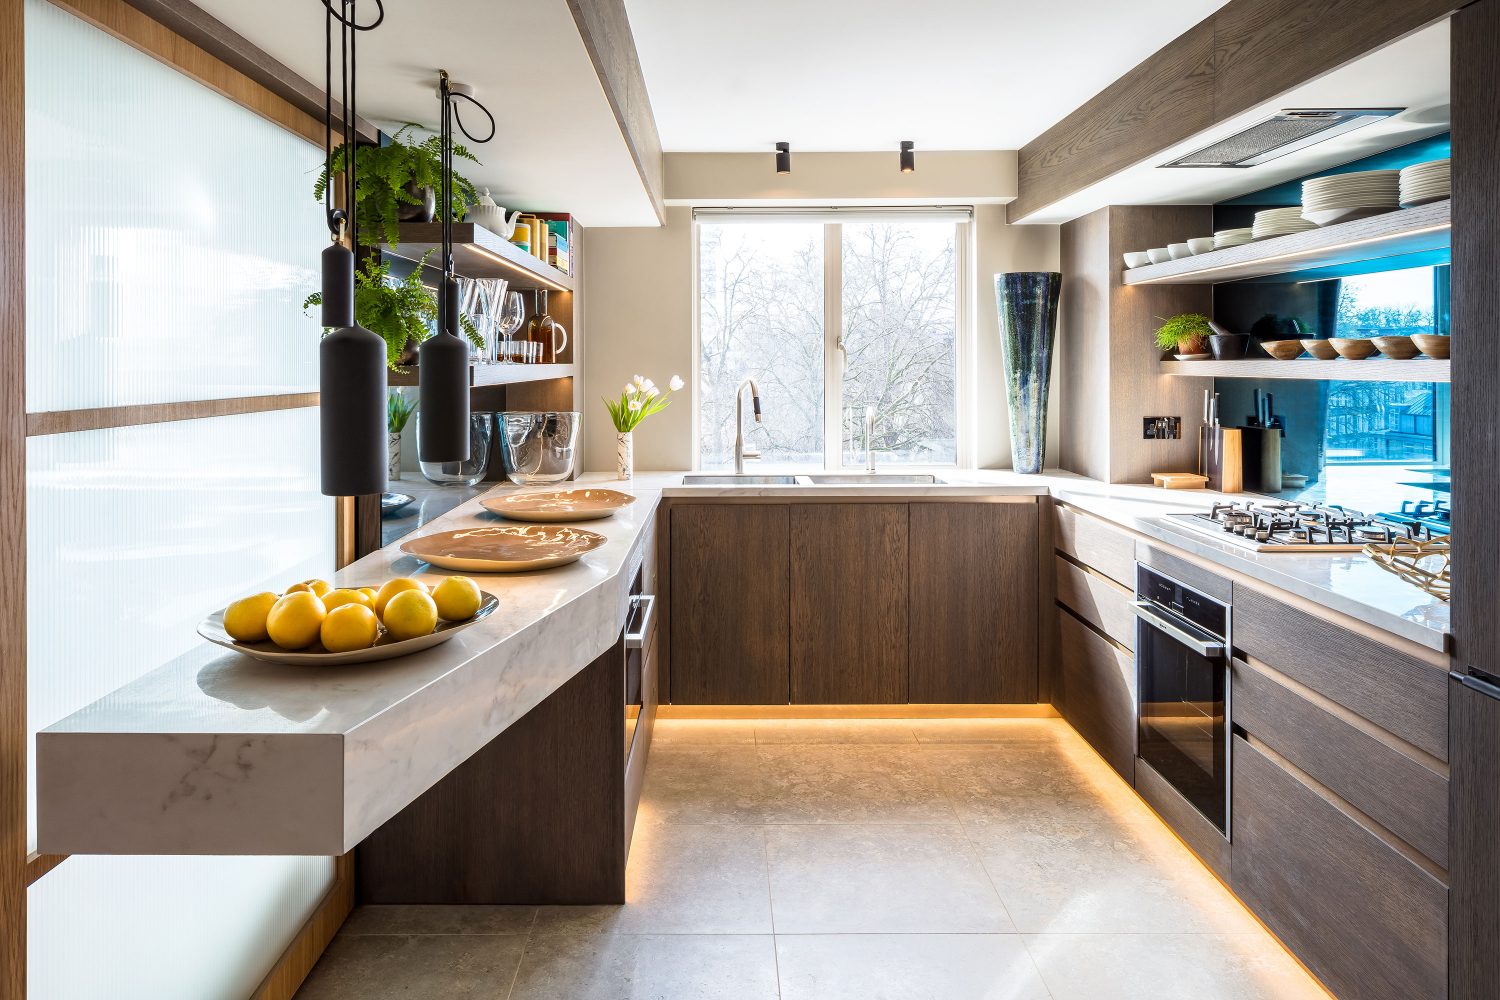 Marble kitchen - Daniel Hopwood home design - interior design London